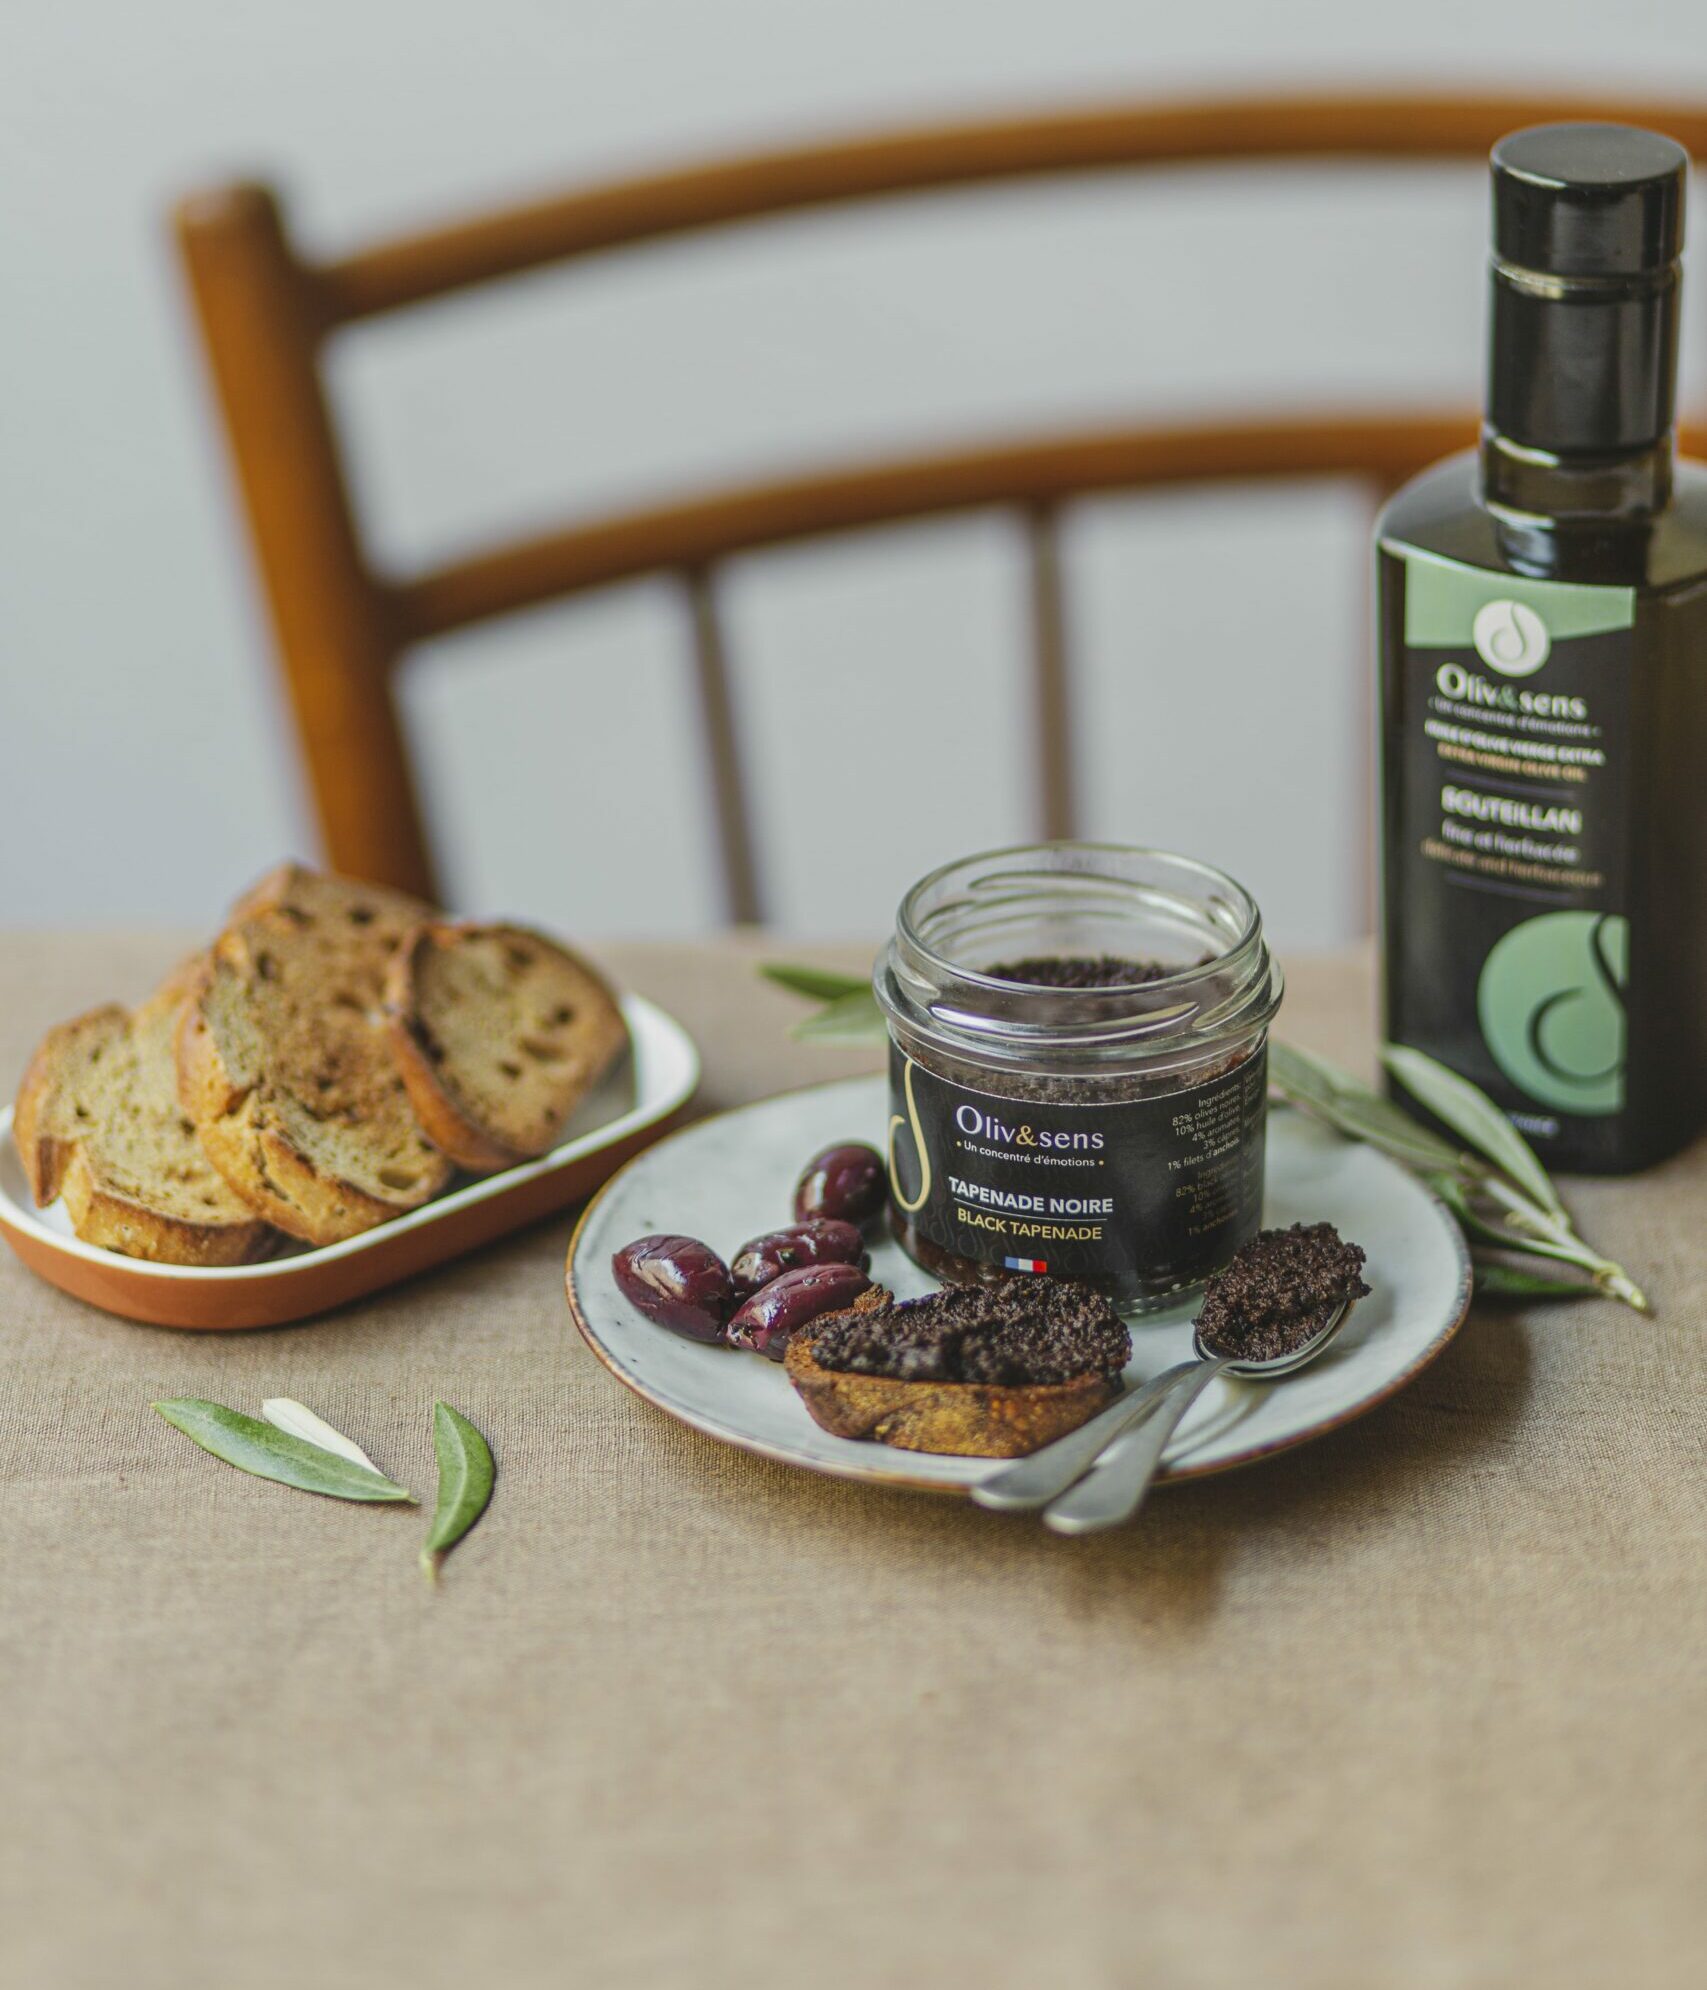 tapenade noire tapenade olives noires tapenade artisanale tapenade française apéro gourmand conserverie artisanale olive et sens olive & sens